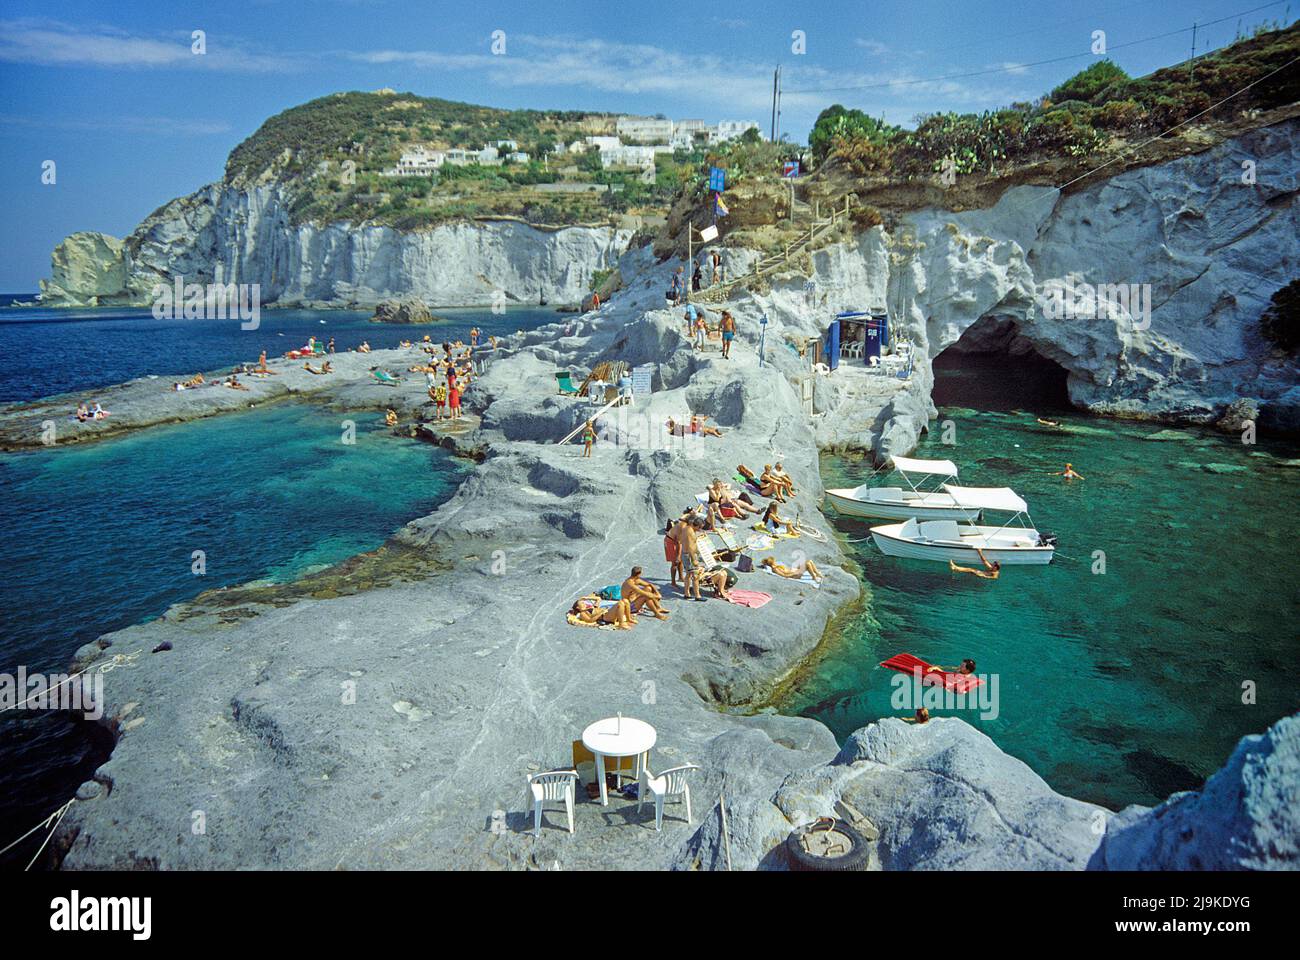 People at a natural pool, bathing beach at Le Forna, Ponza, Island, South Italy, Italy, Tyrrhenian Sea, Mediterranean Sea, Europe Stock Photo